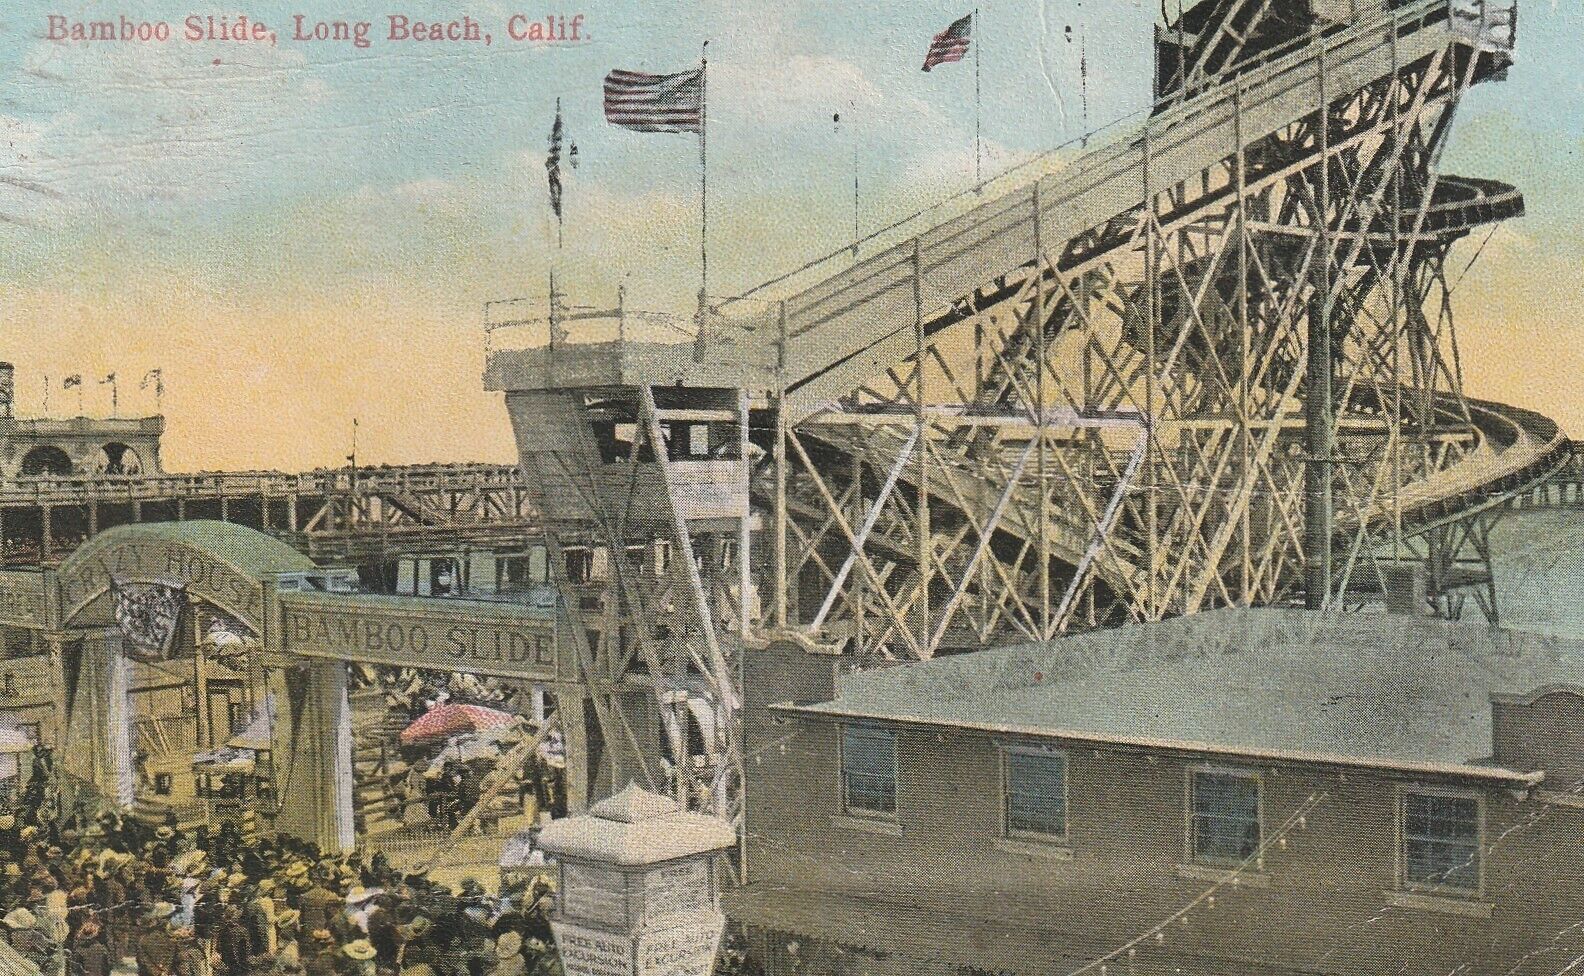 1923 Long Beach , California, Bamboo Slide, 1038